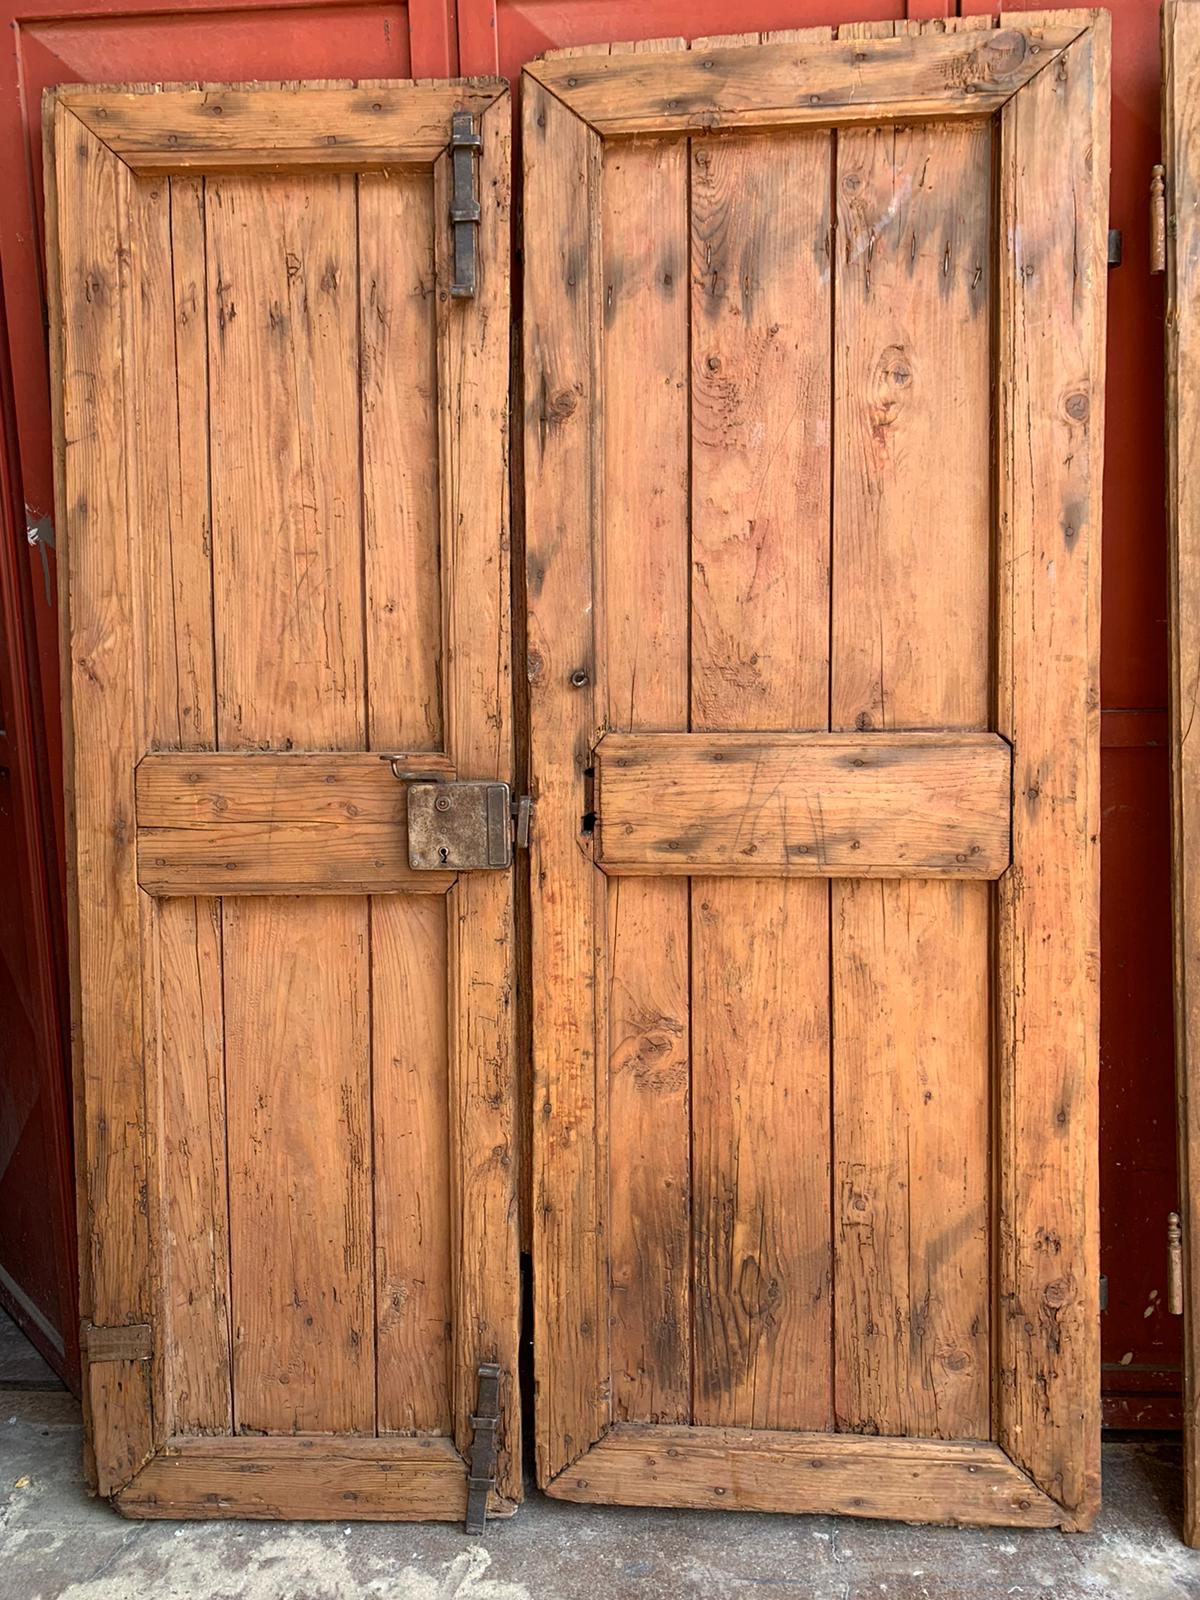 ptir460 - porta rustica a due battenti, epoca '800, misura max cm L 130 x H 186 